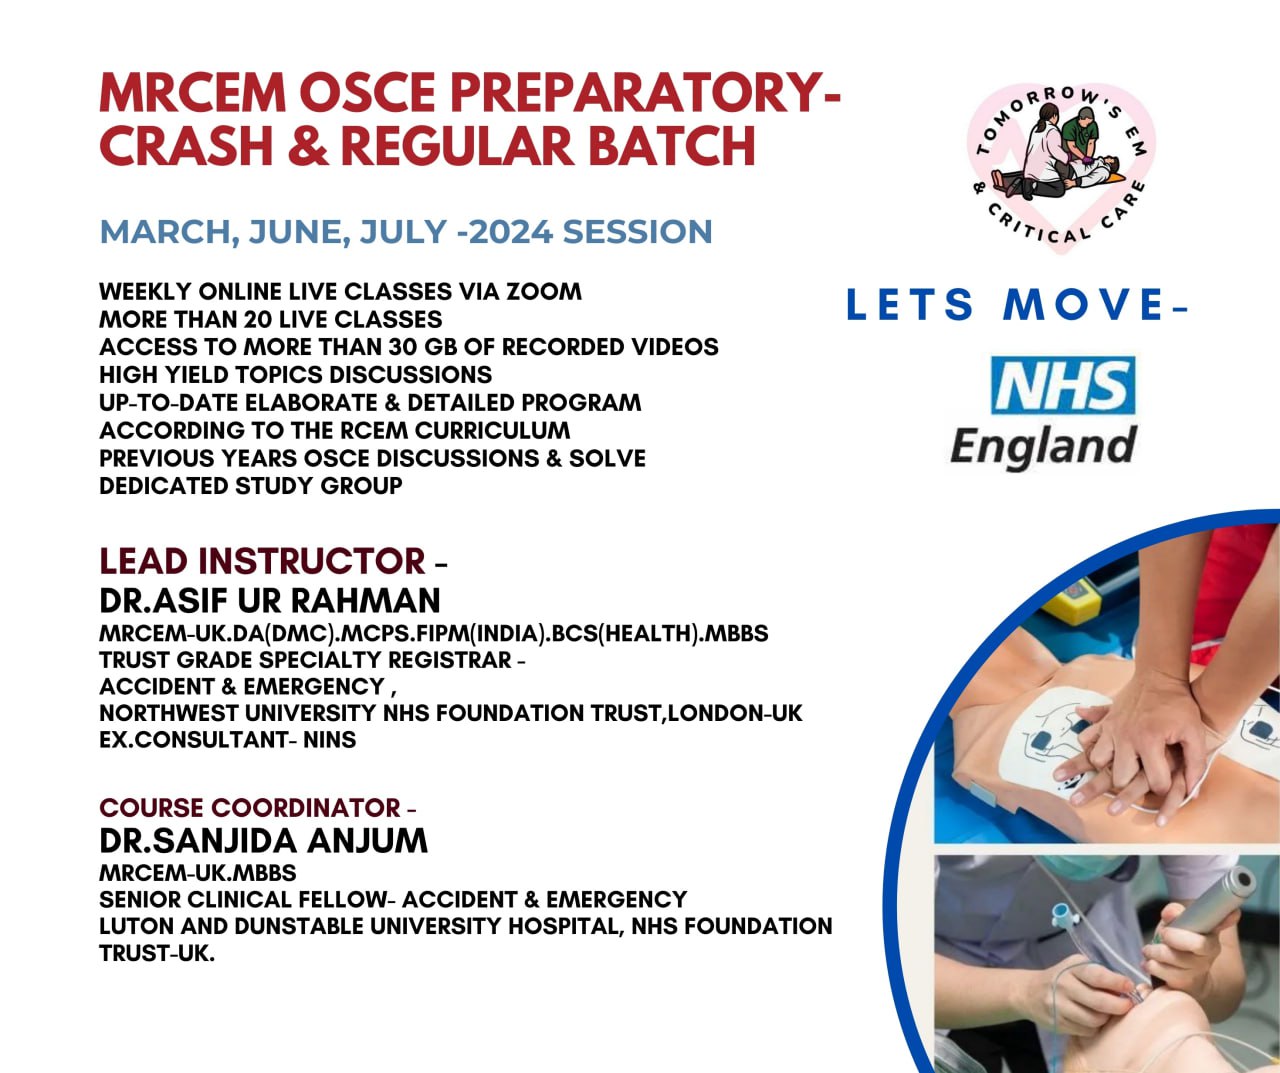 MRCEM OSCE PREPARATORY-CRASH & REGULAR BATCH